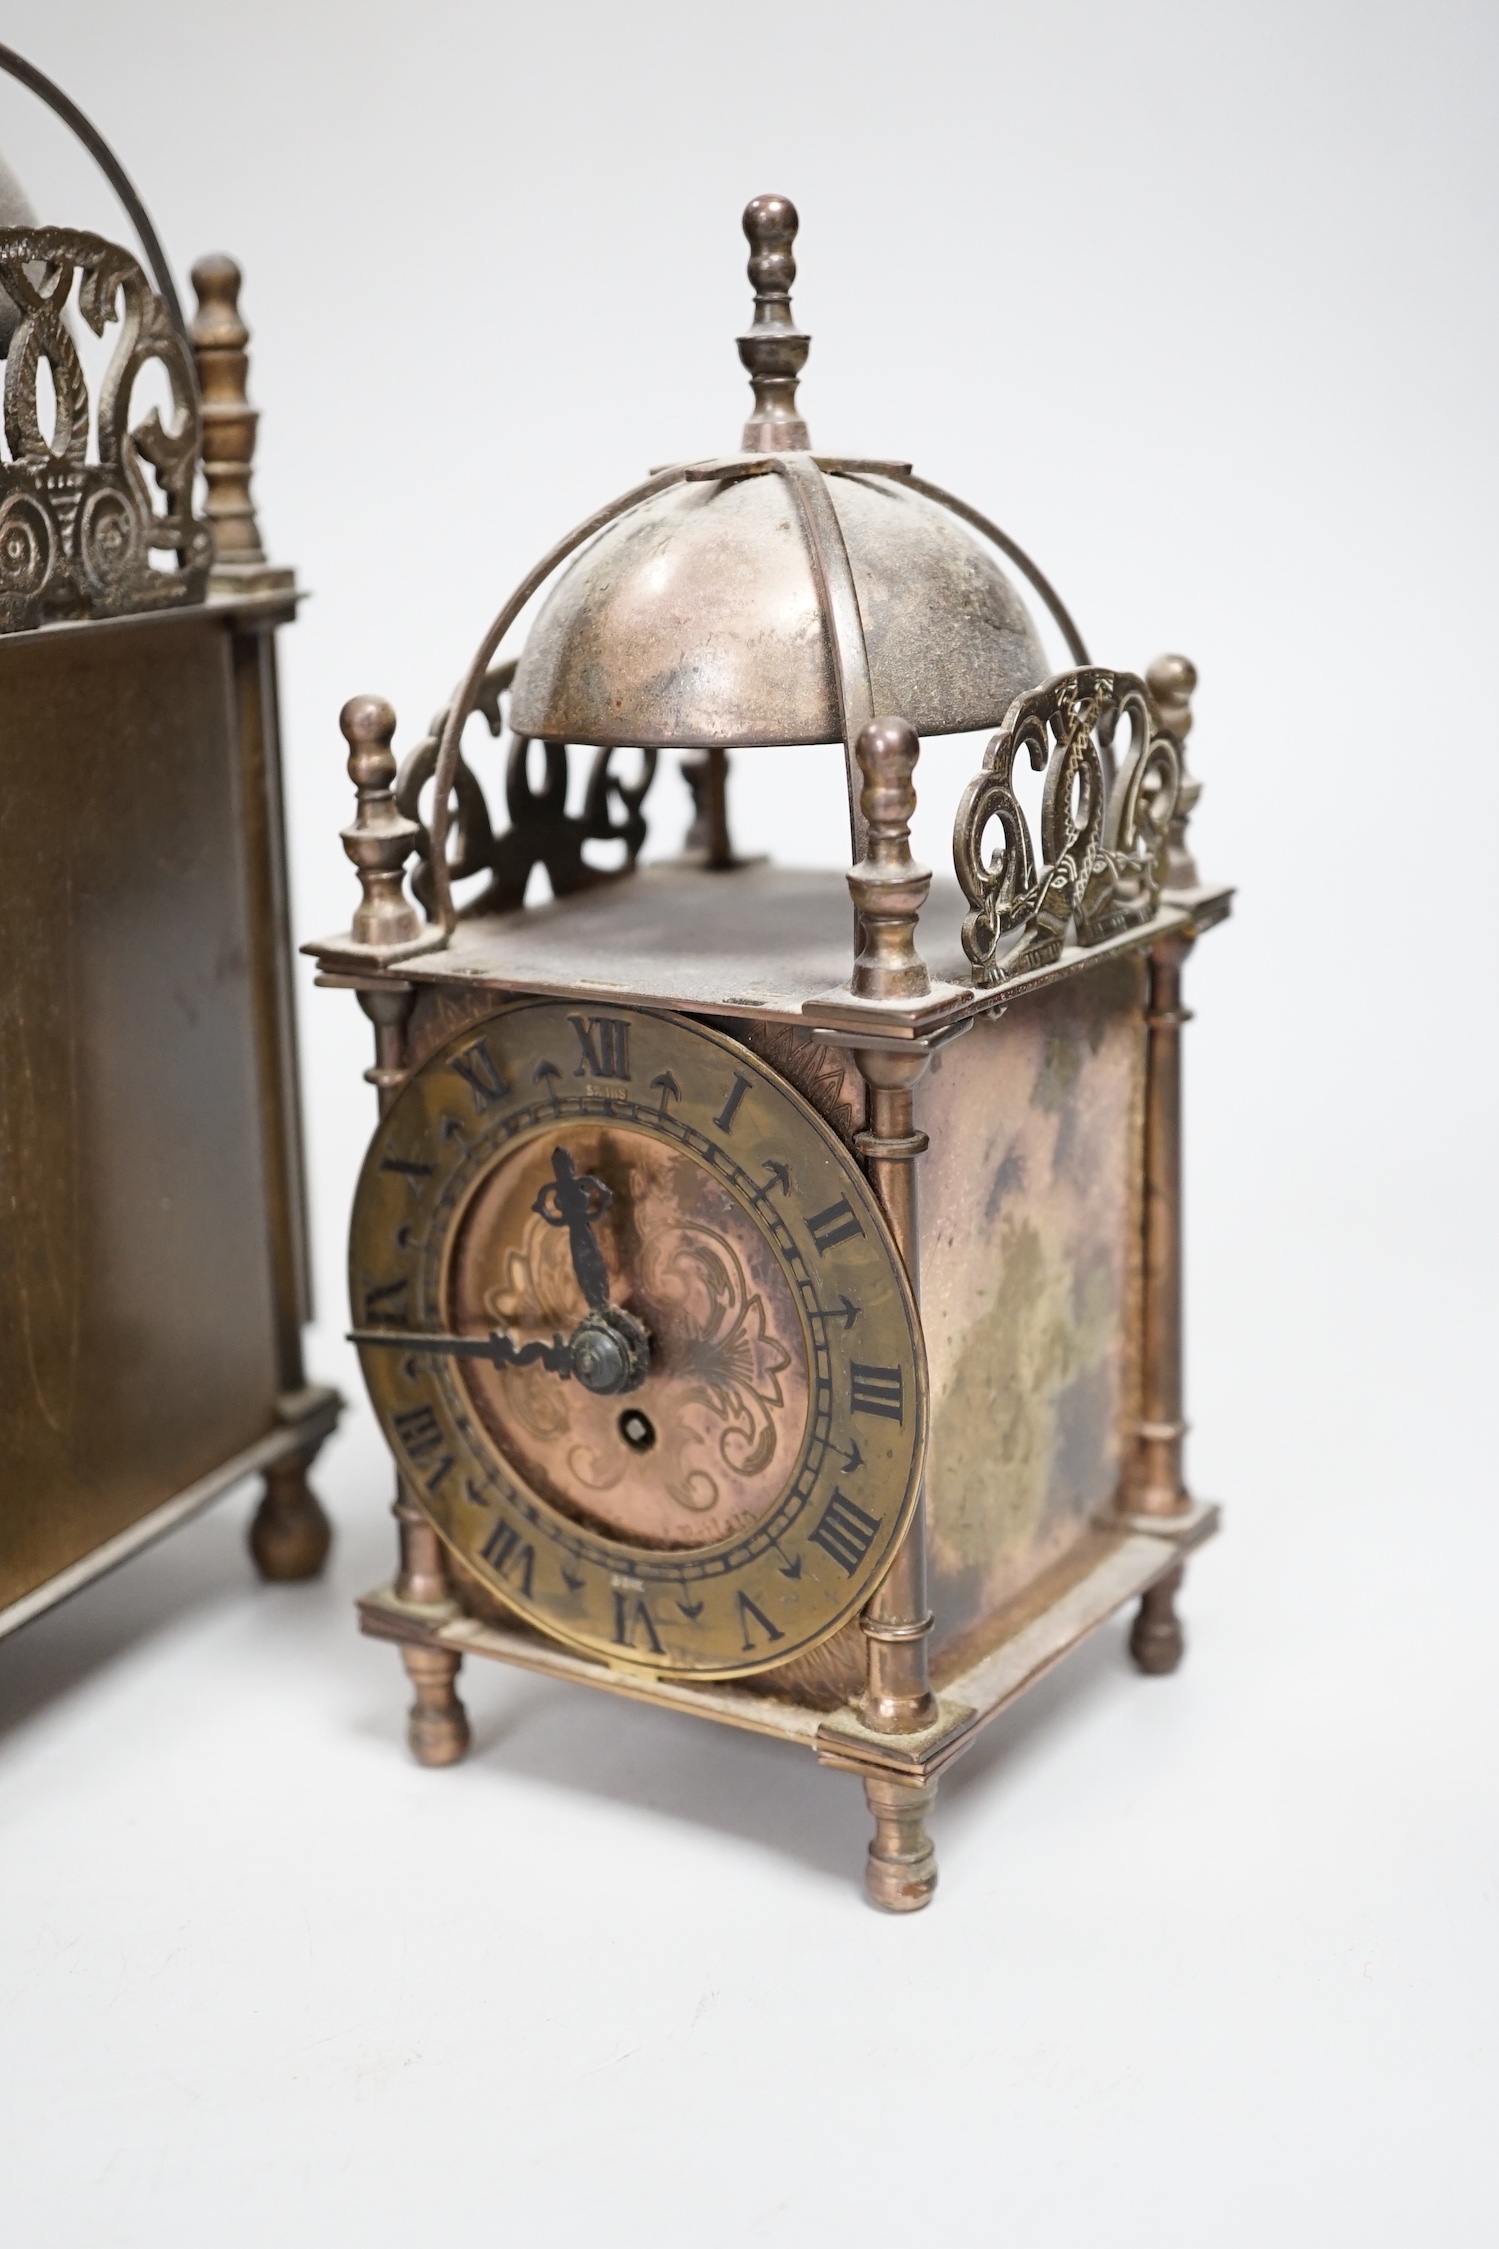 Two reproduction brass lantern clocks, tallest 24cm high